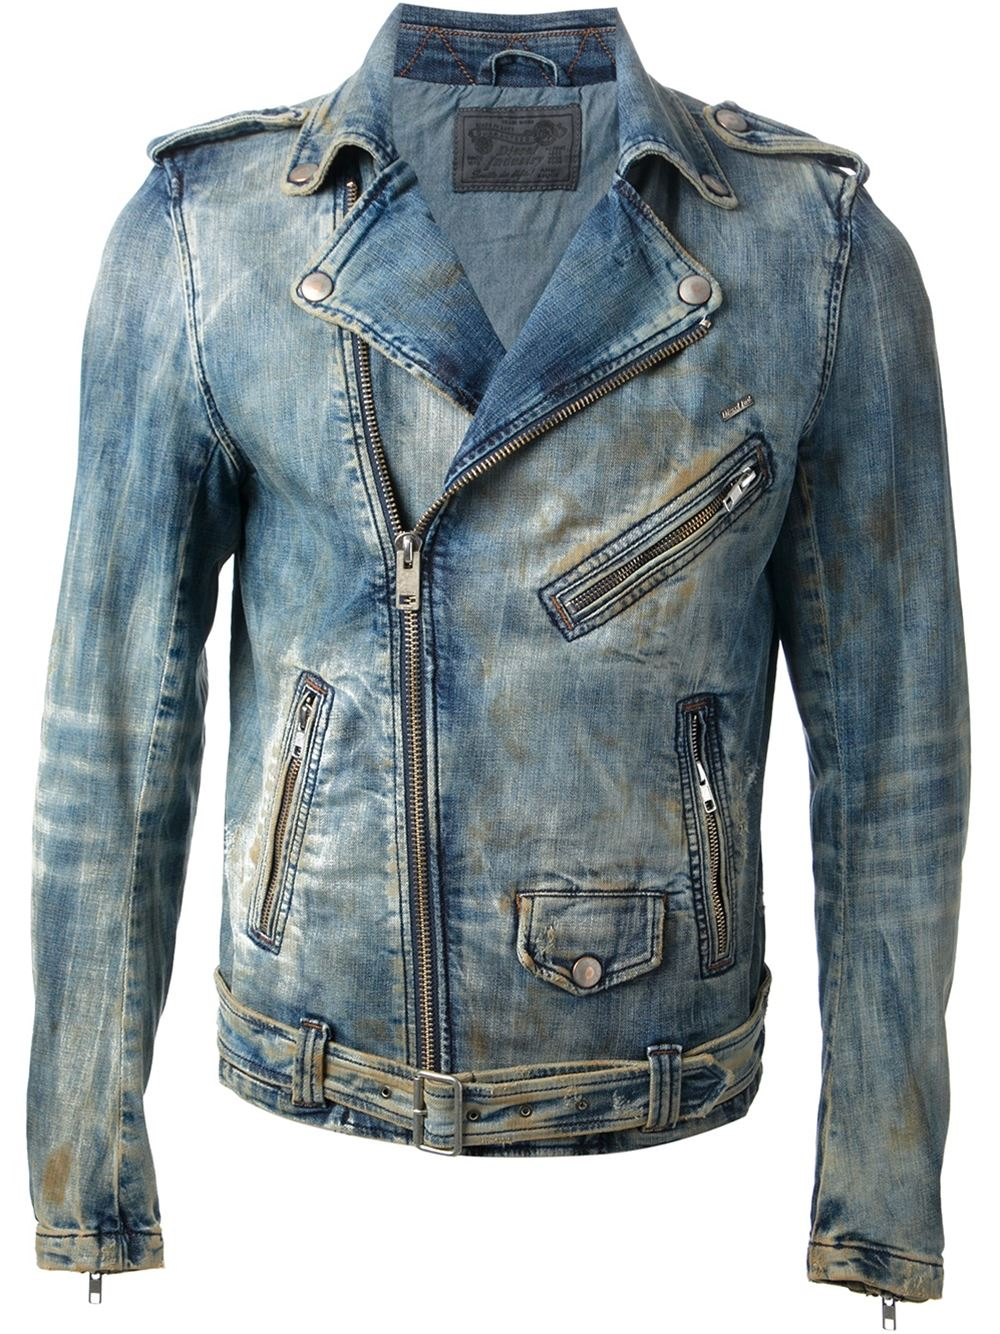 diesel denim - Google Search | Denim jacket fashion, Leather jacket men